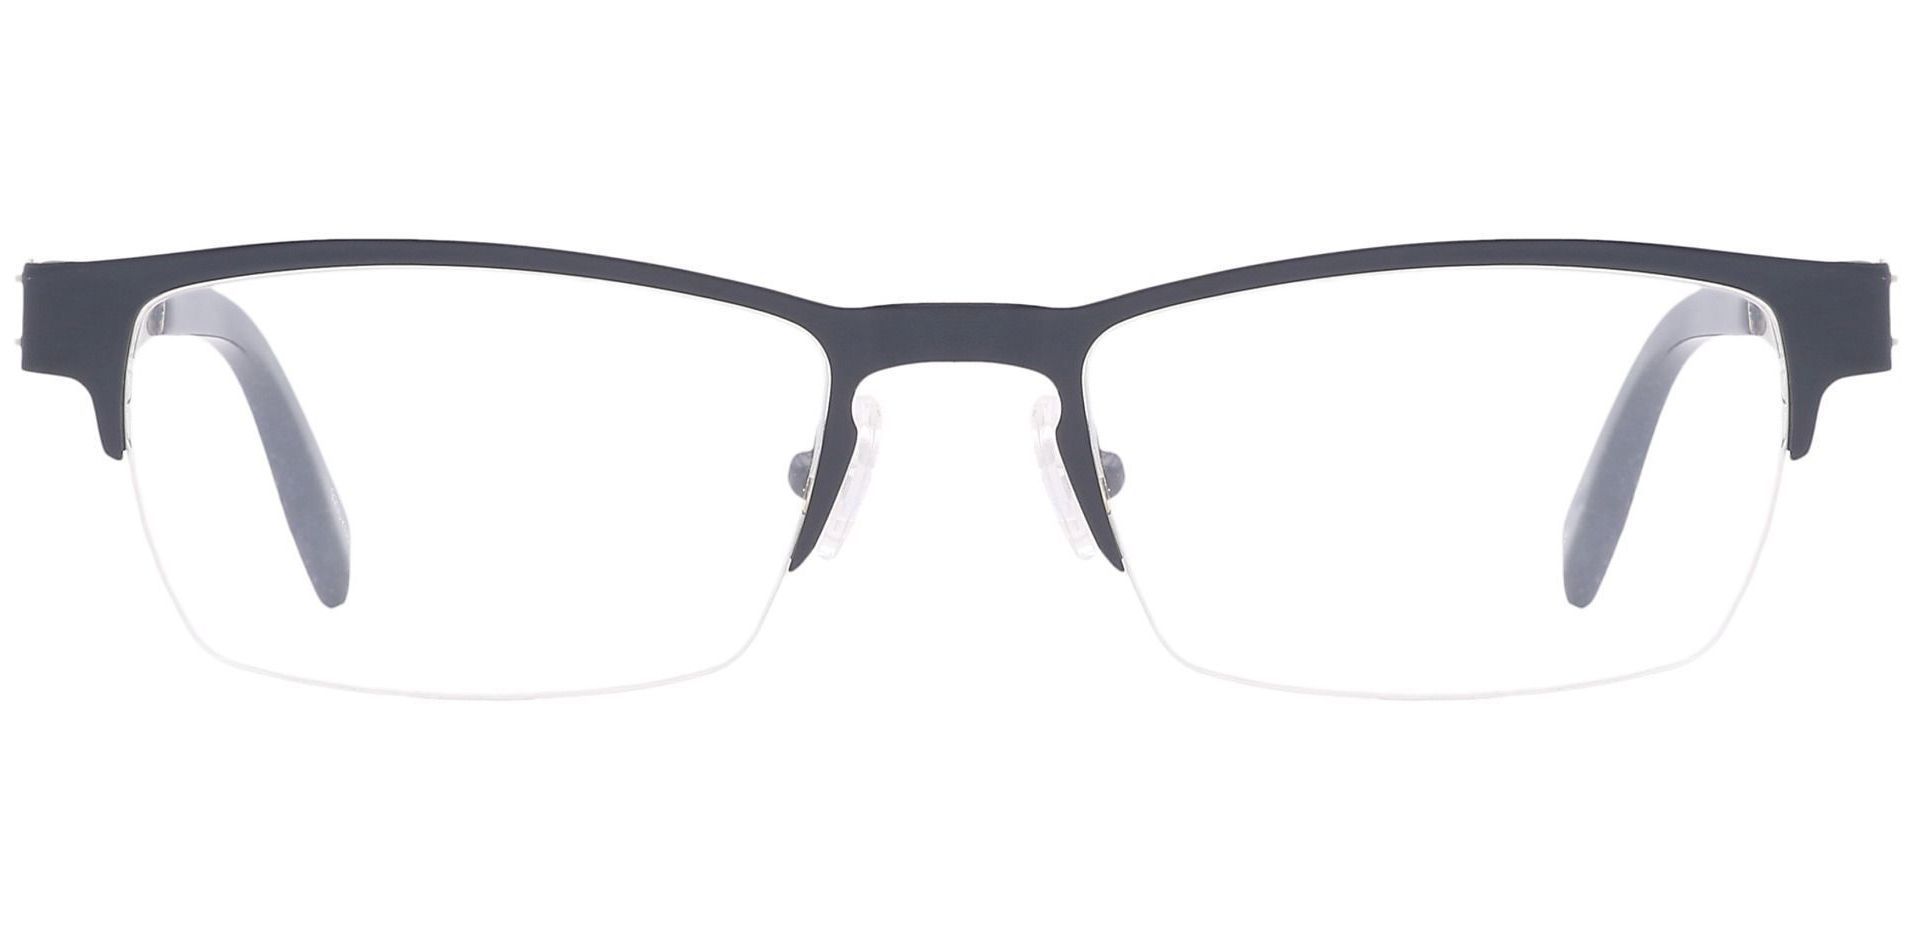 Stefani Rectangle Prescription Glasses - Black